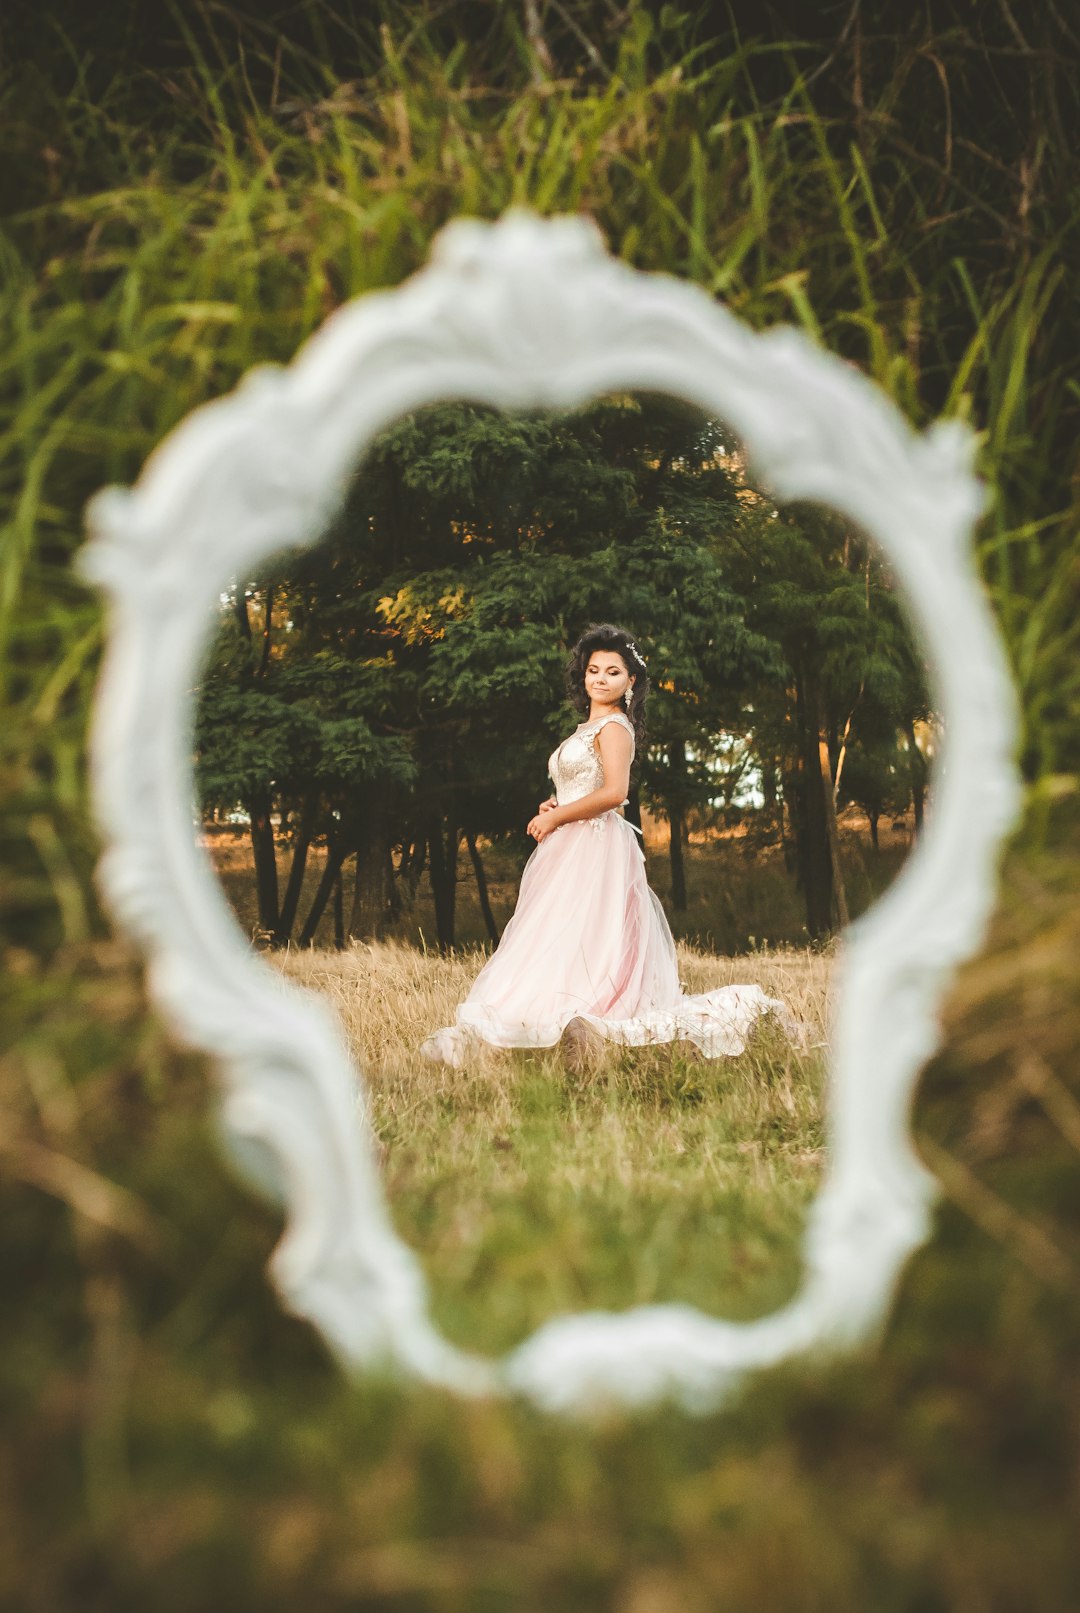 woman in white wedding dress standing on green grass field